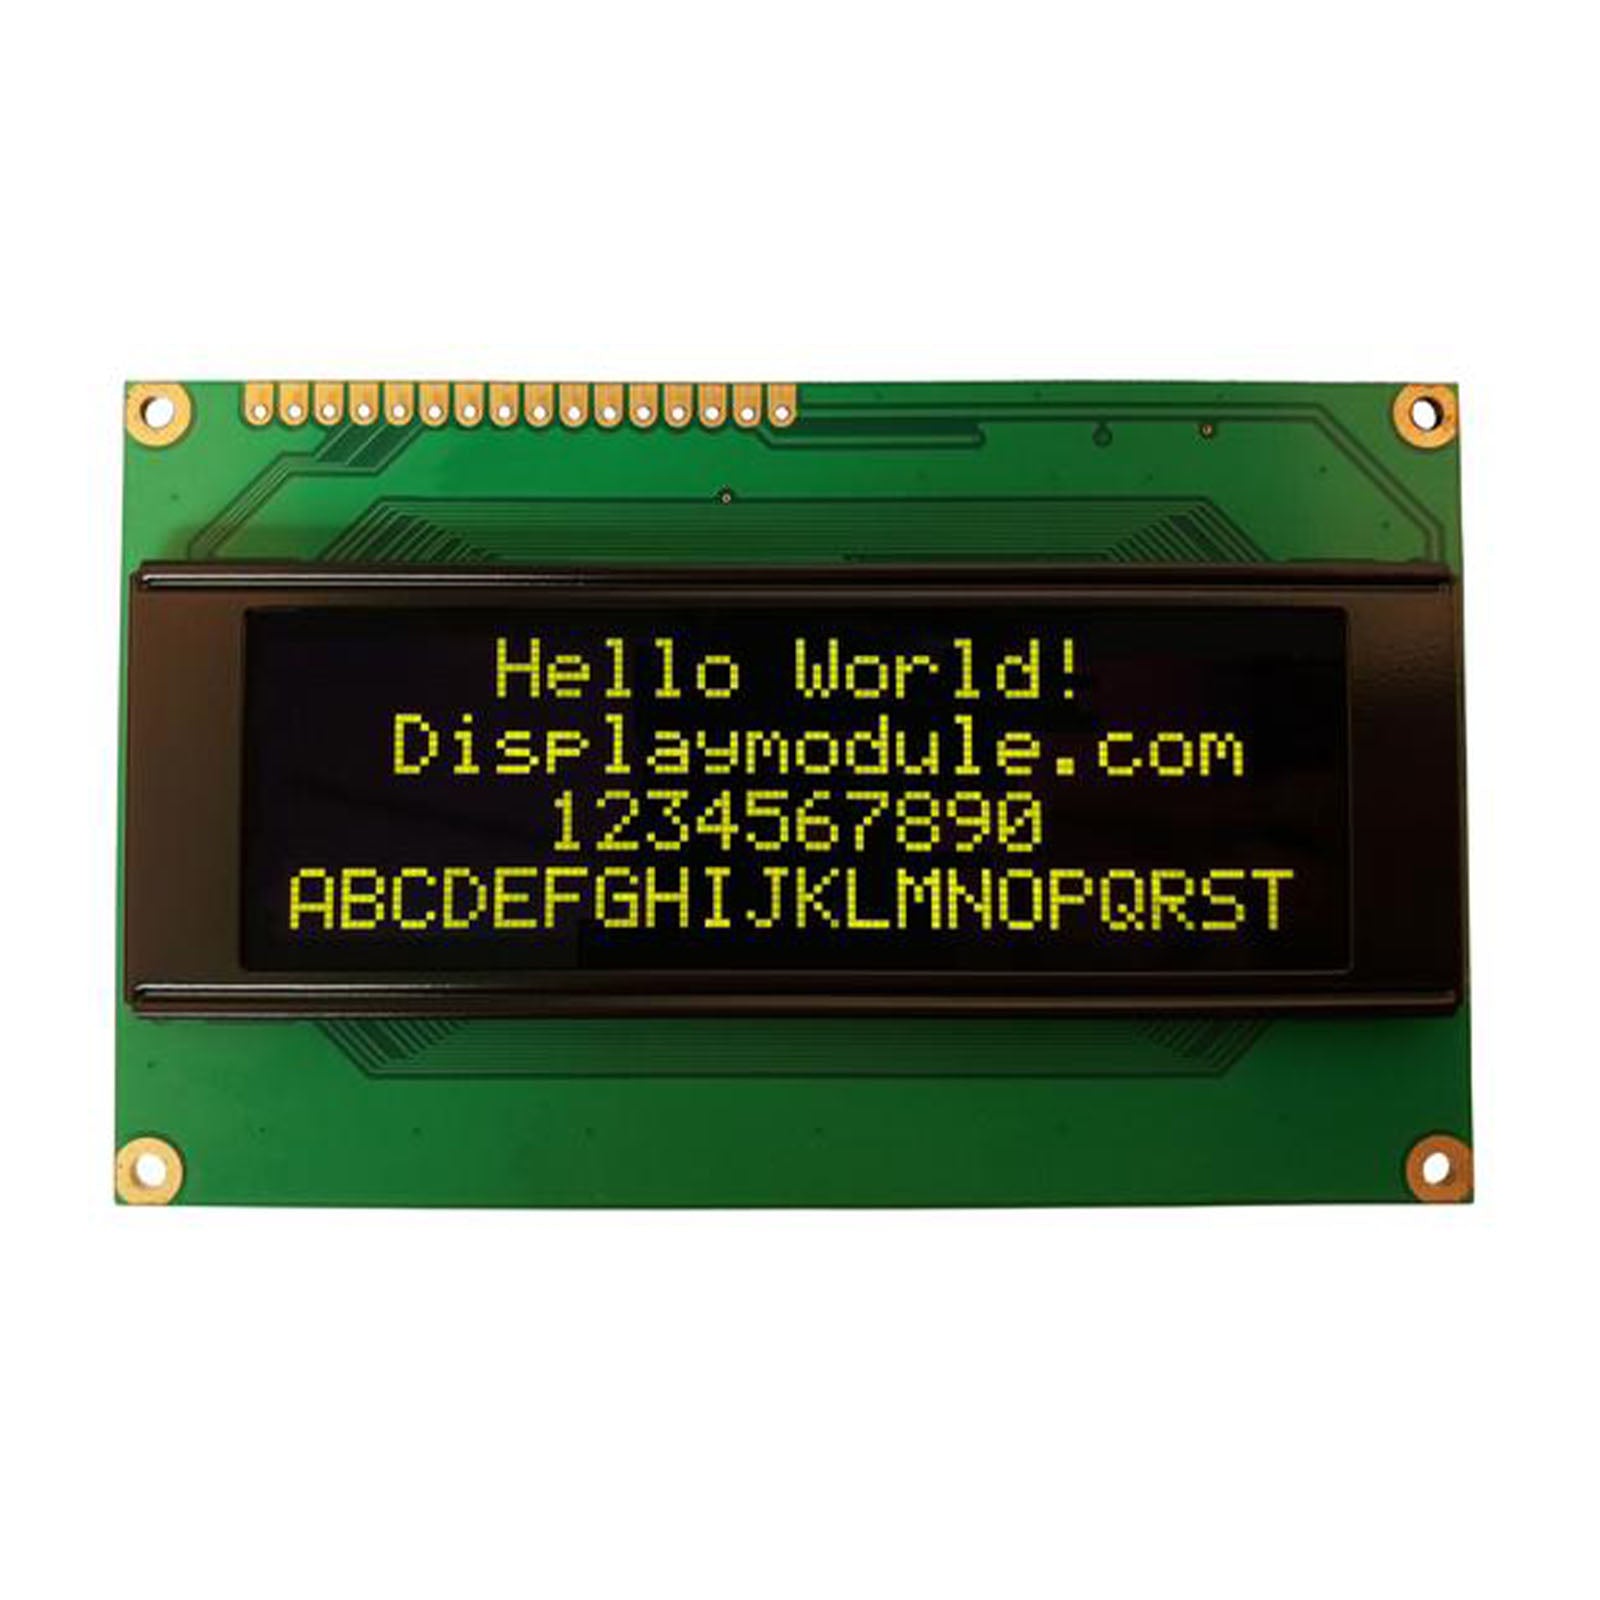 DisplayModule 20x4 Monochrome Character OLED - MCU, SPI, I2C